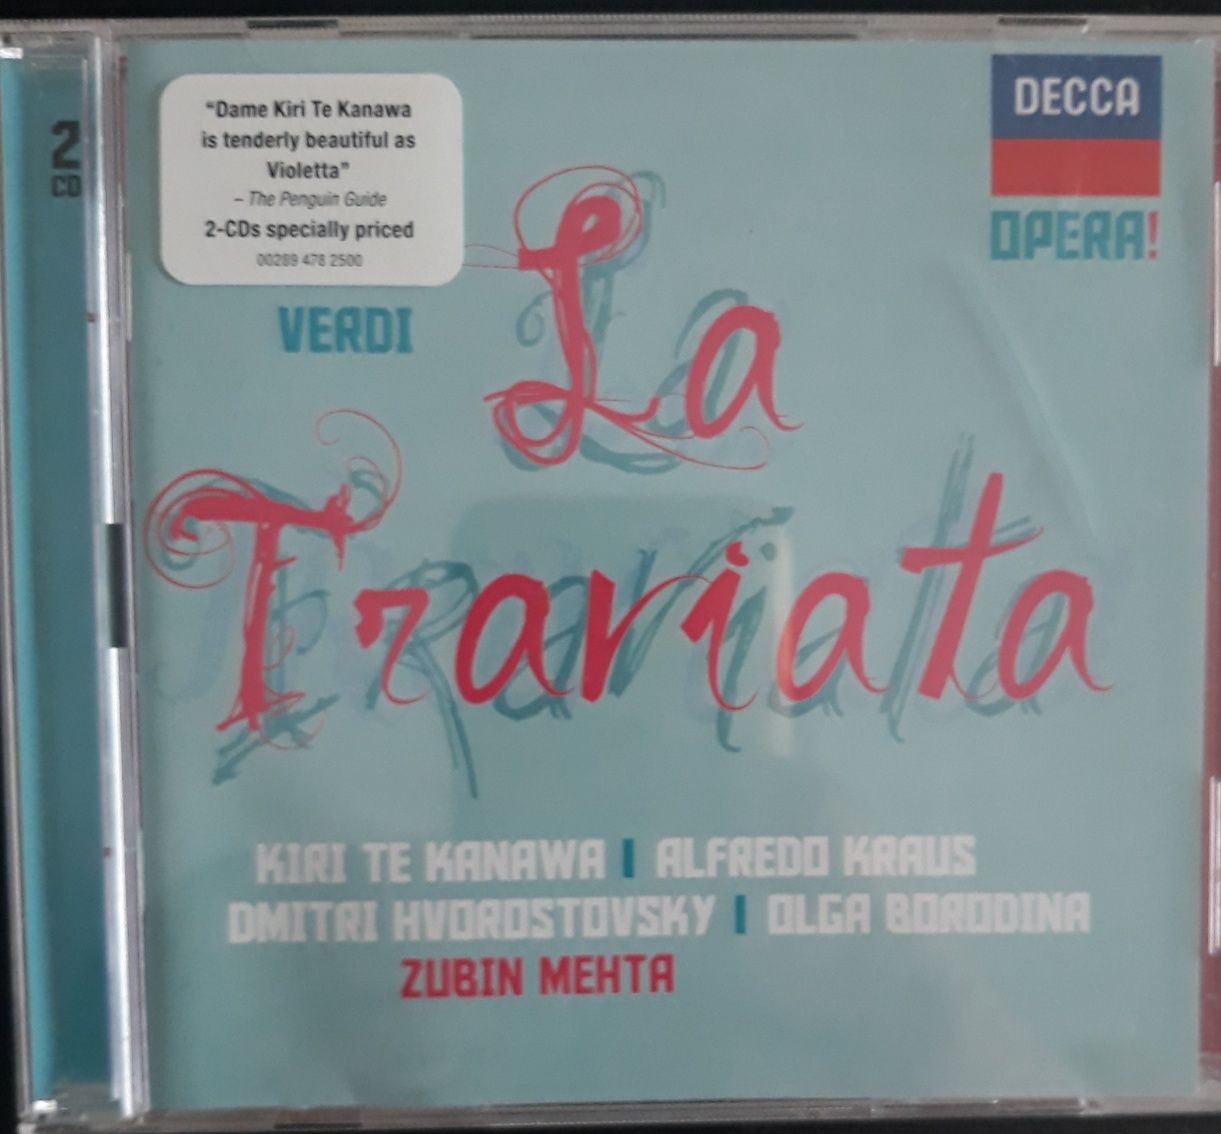 CD Verdi La Trariata (2CD)